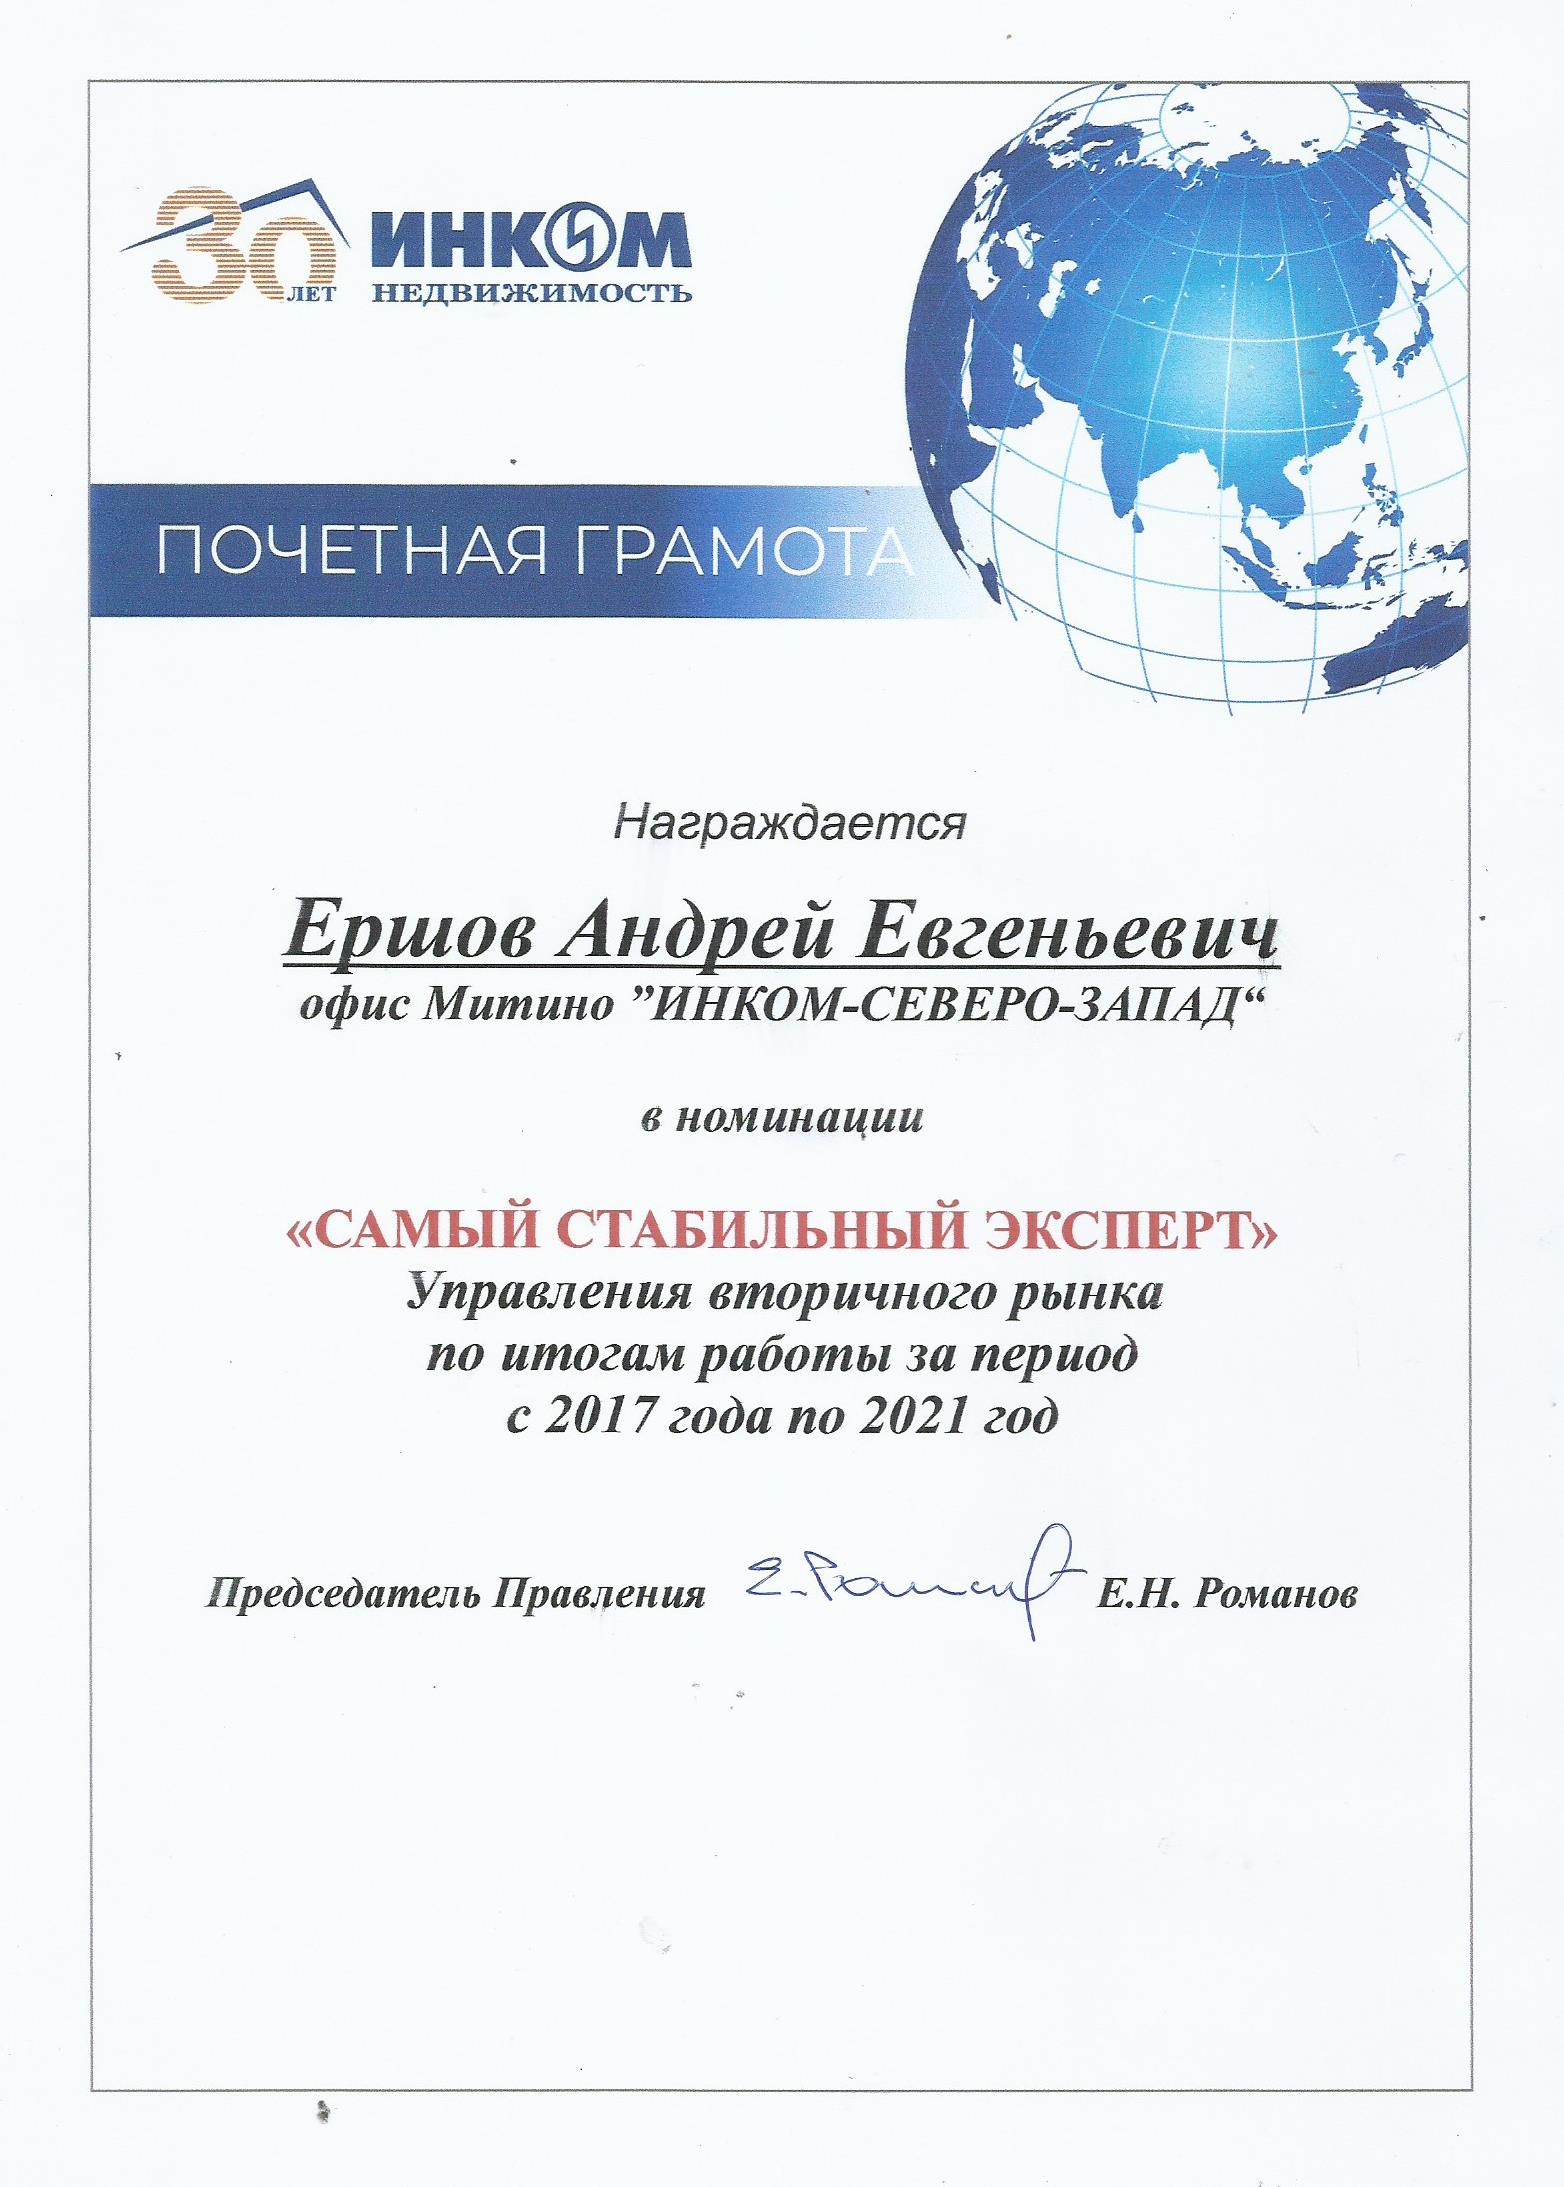 nagrada-Ershov-2.jpg